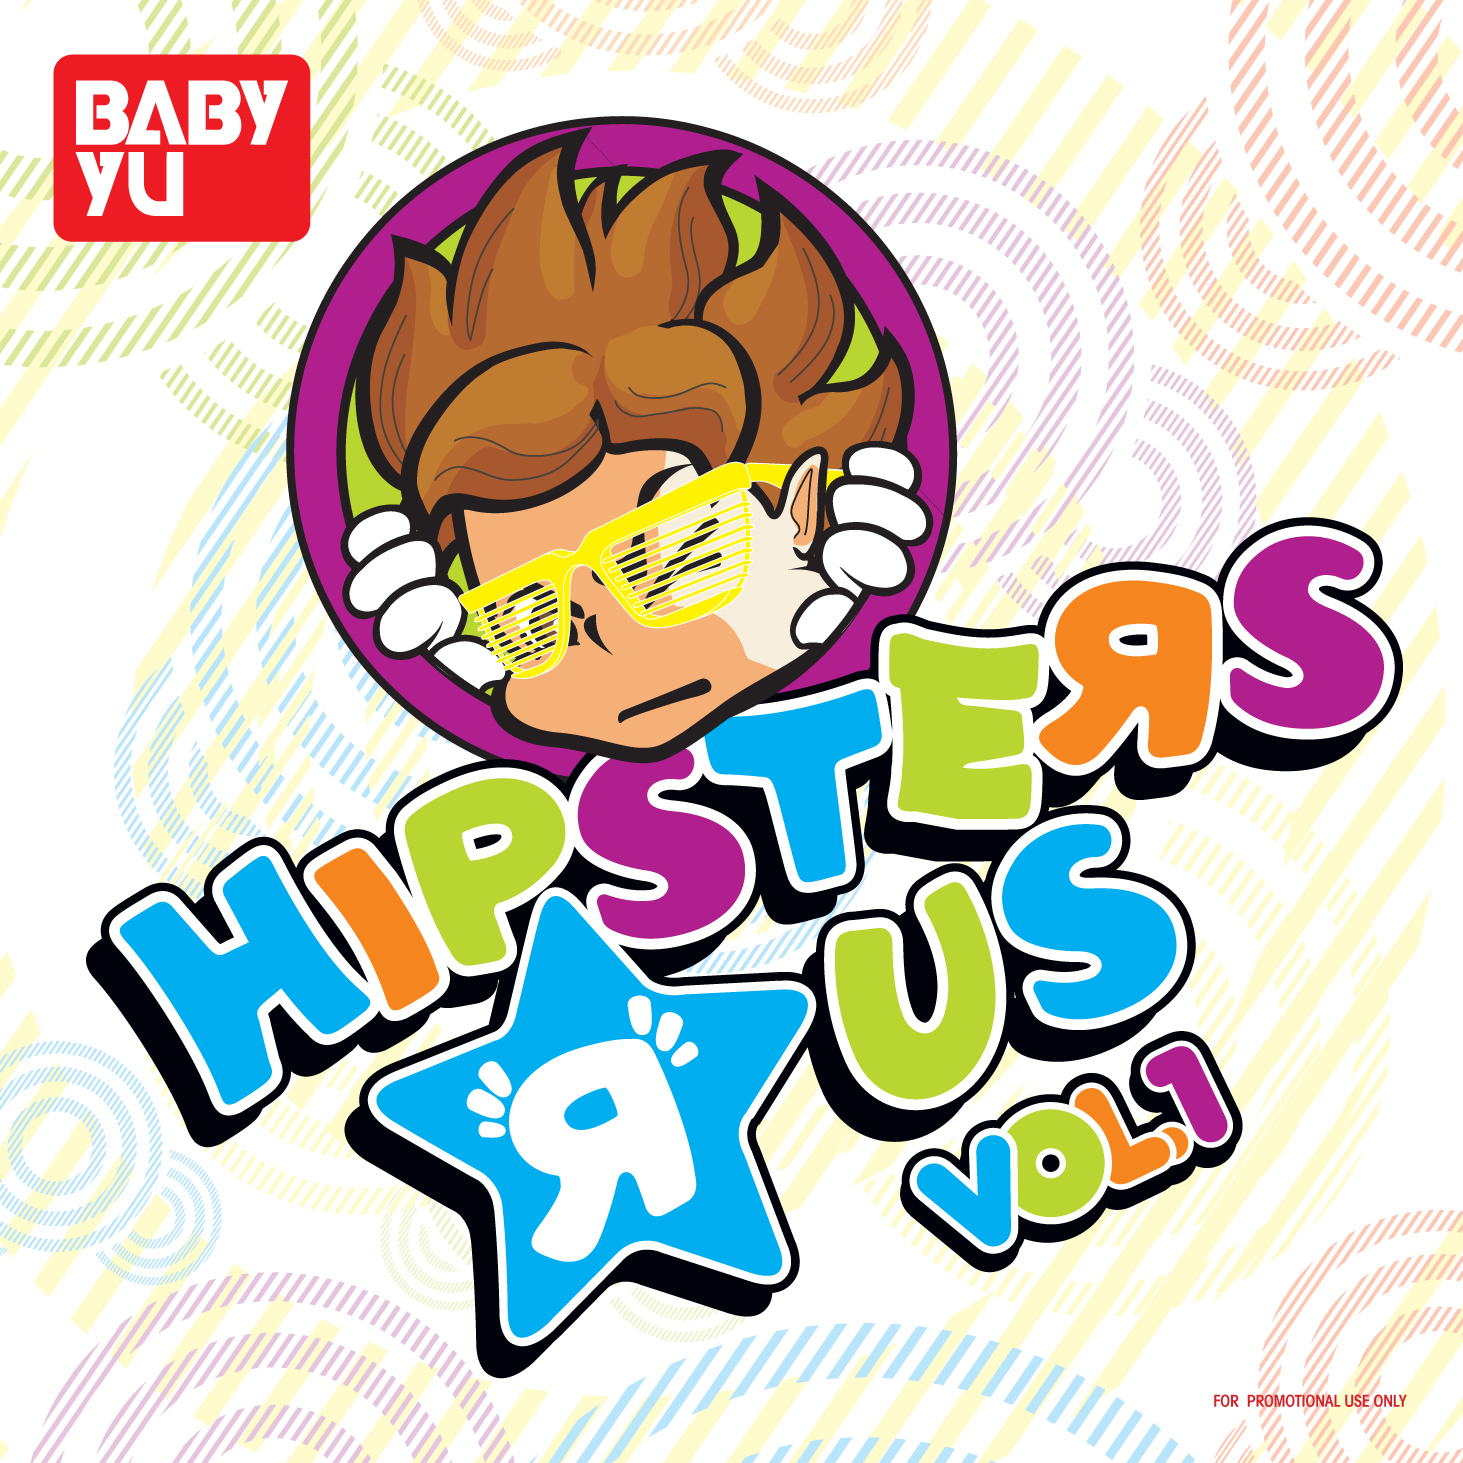 Hipster’s ’R’ Us Mixtape Vol. 1